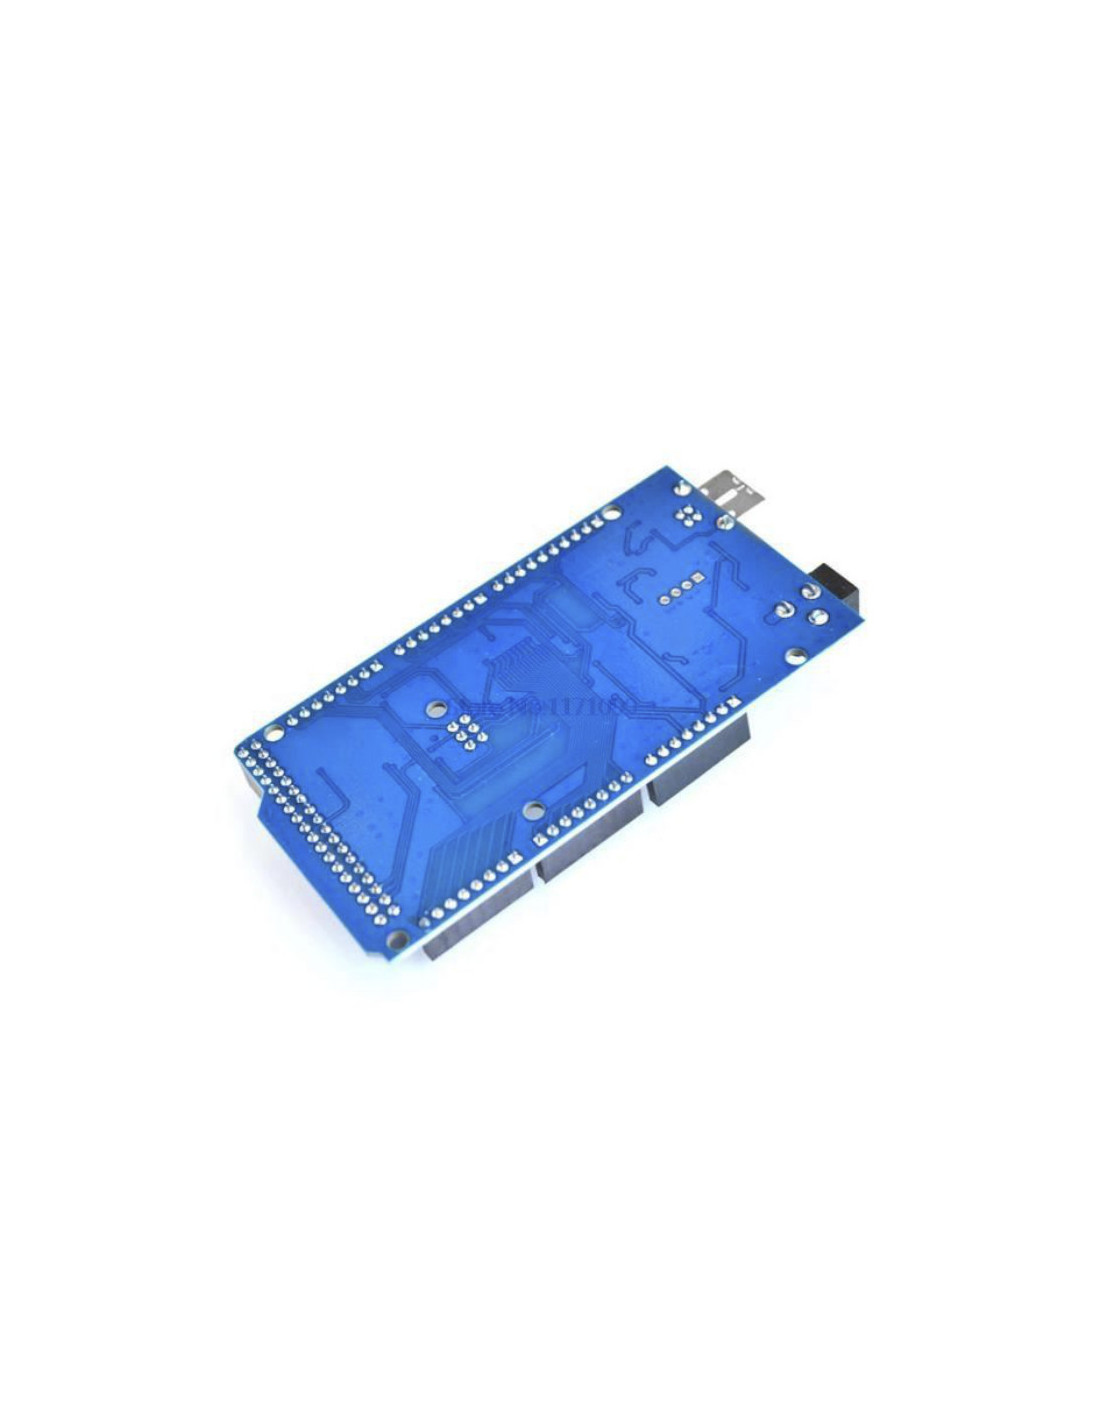 Arduino MEGA 2560 R3 compatible CH340